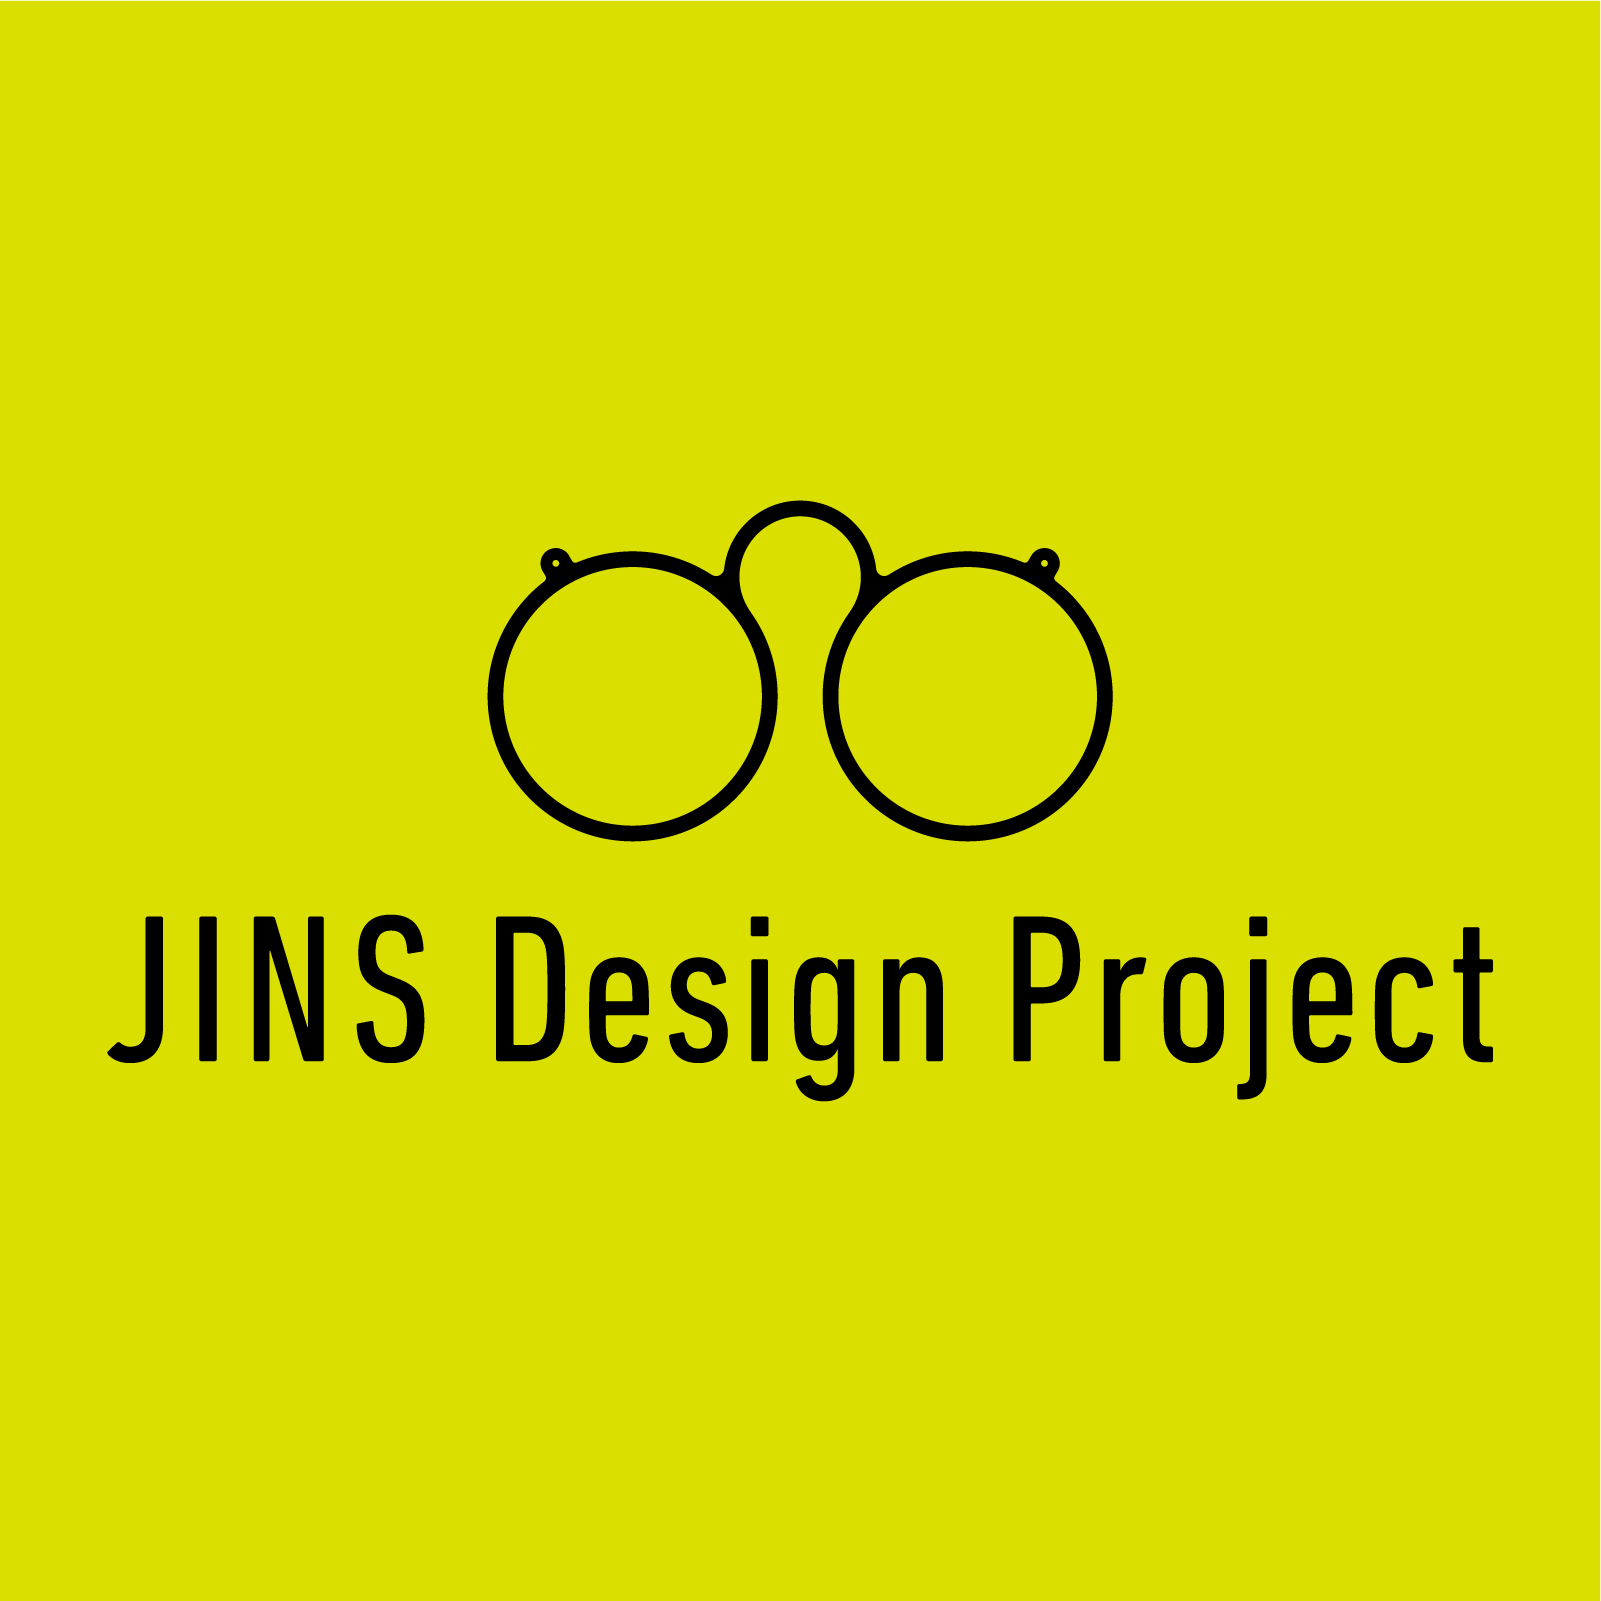 JINS Design Project